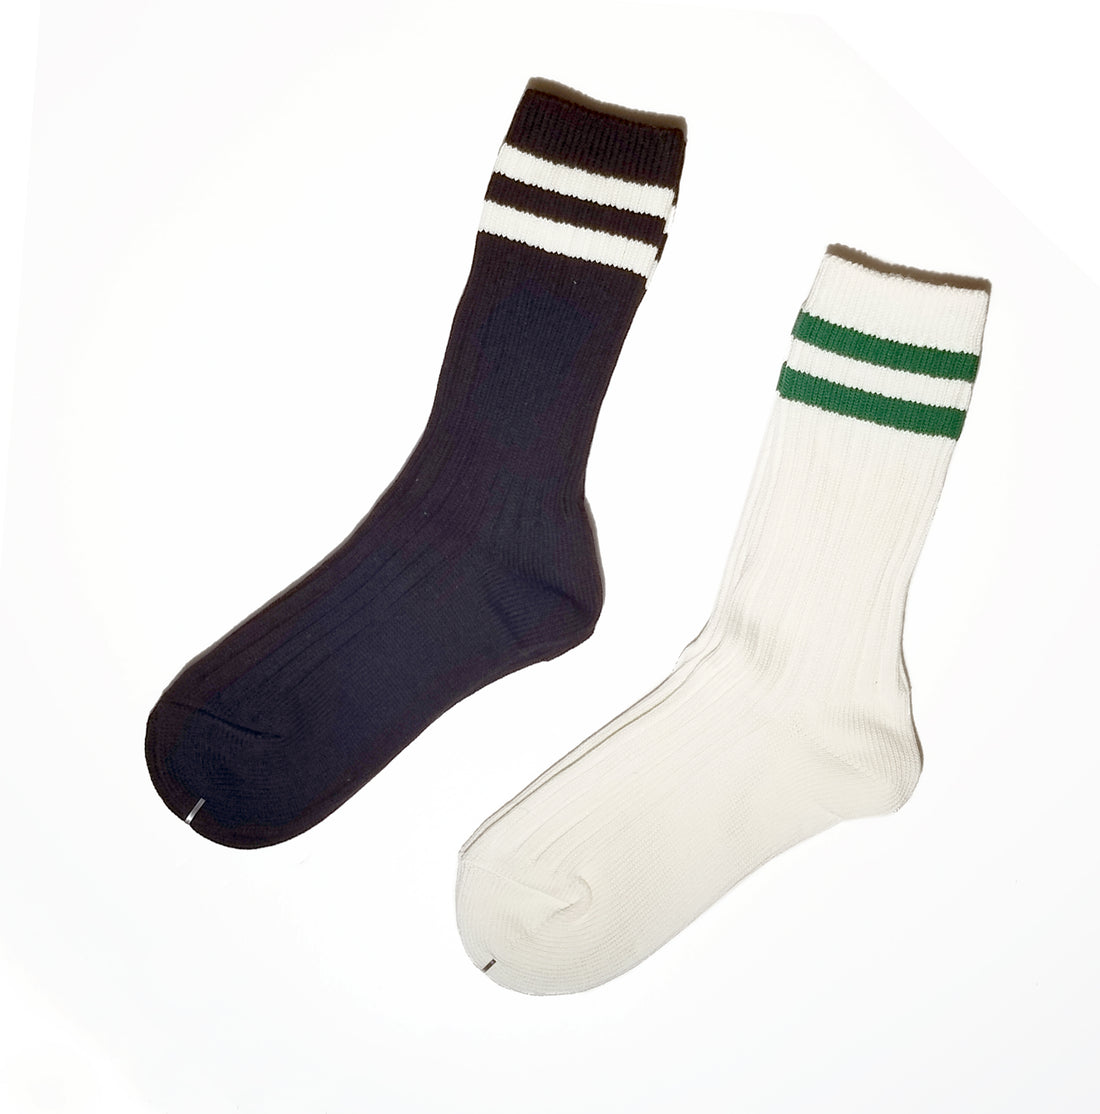 WFH Ribbed-knit Socks • Black & Forest Green